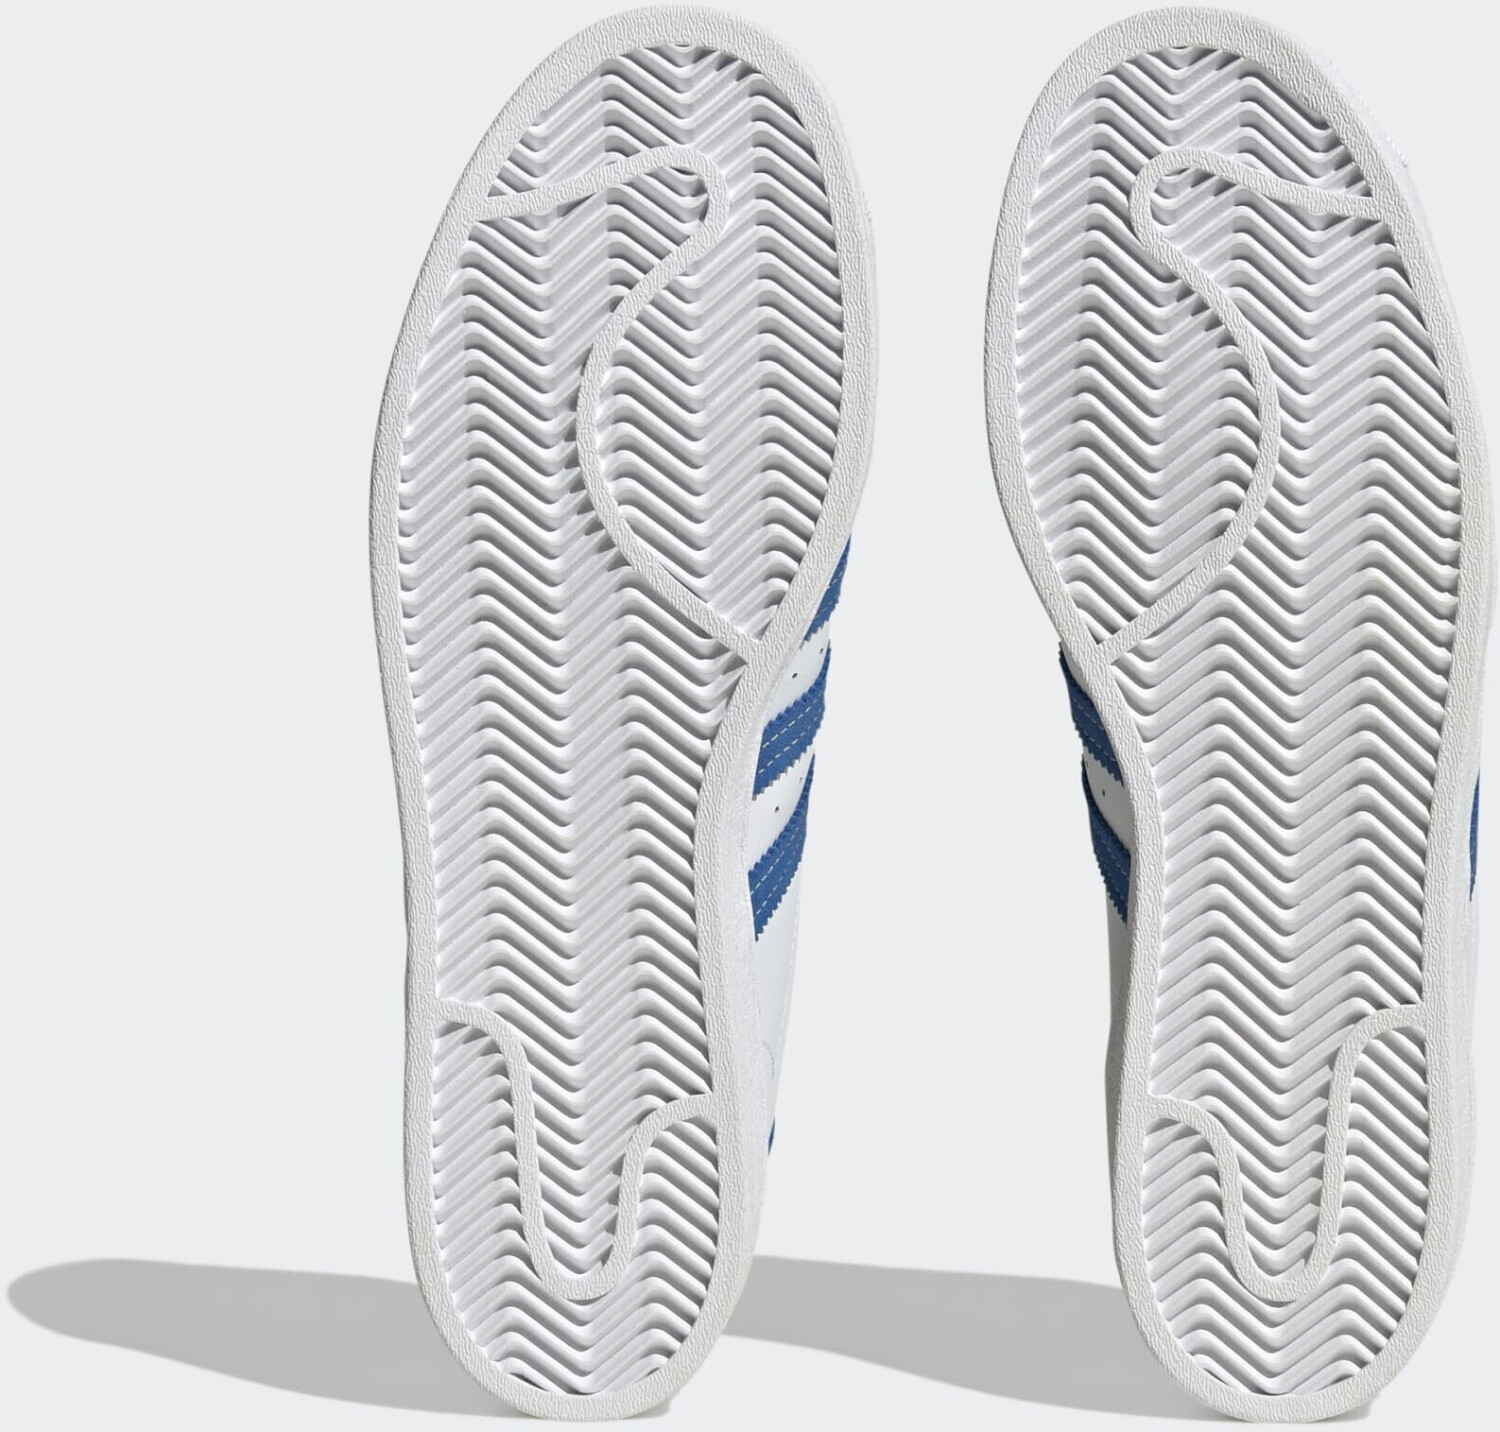 Adidas Superstar cloud white/sand strata/bright € bei Preisvergleich royal | ab 77,59